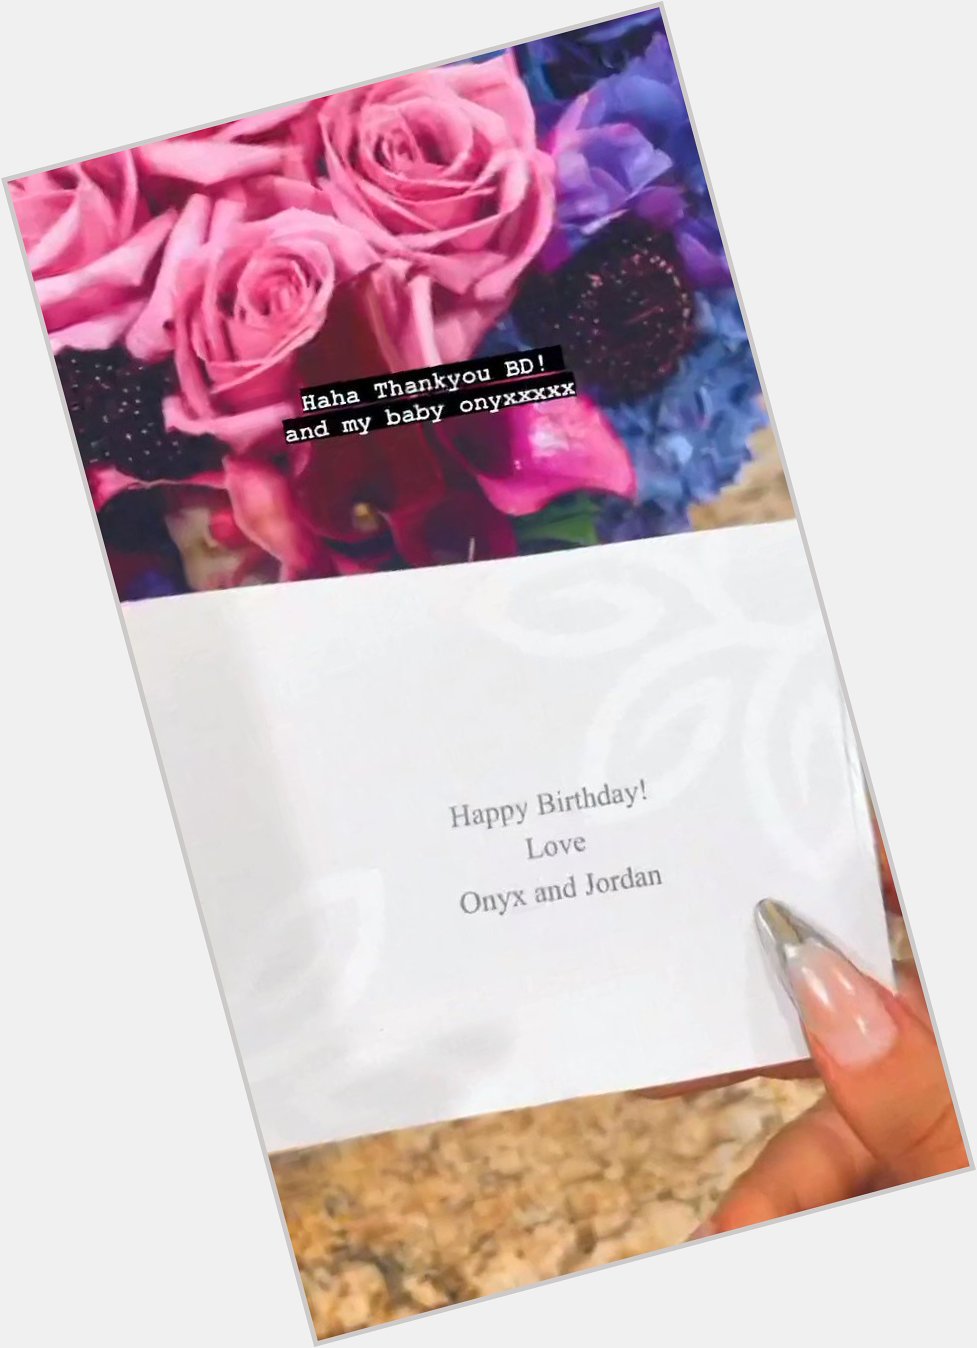 PlayBoiCarti enviou rosas de presente pra Iggy Azalea. 

\"Happy birthday! Love Onyx And Jordan.\" 